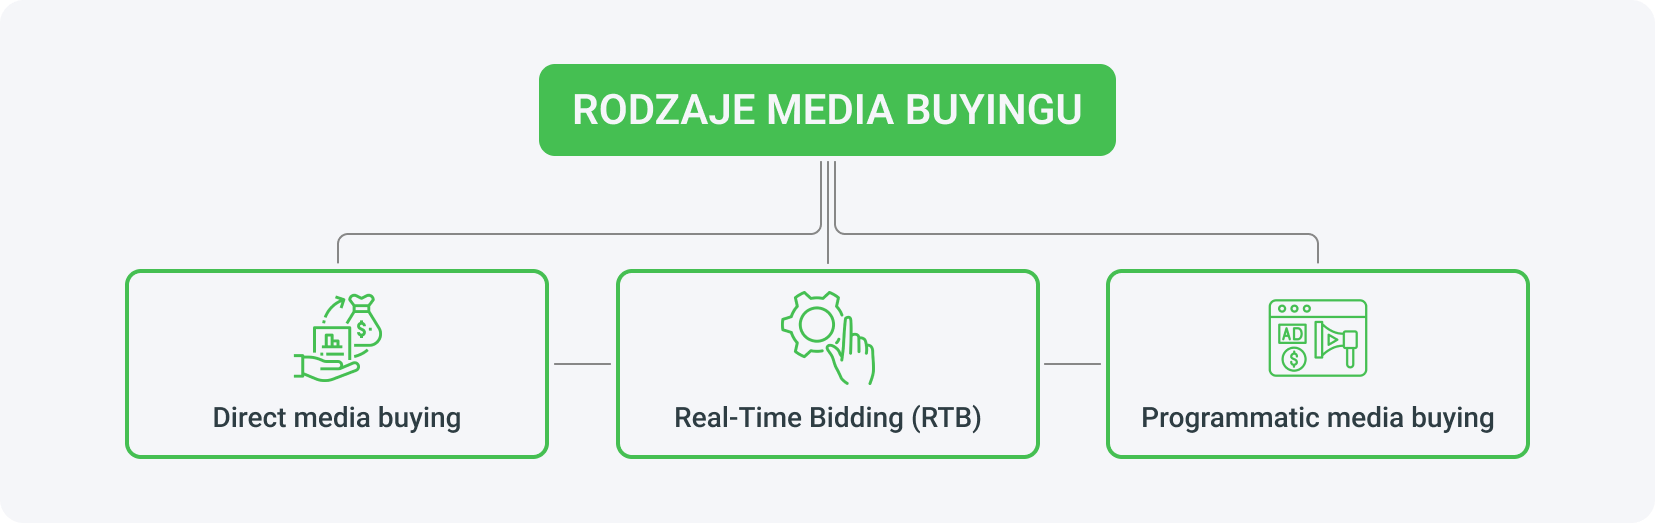 Media buying można podzielić na direct, real-time bidding i programmatic (programmatic advertising)